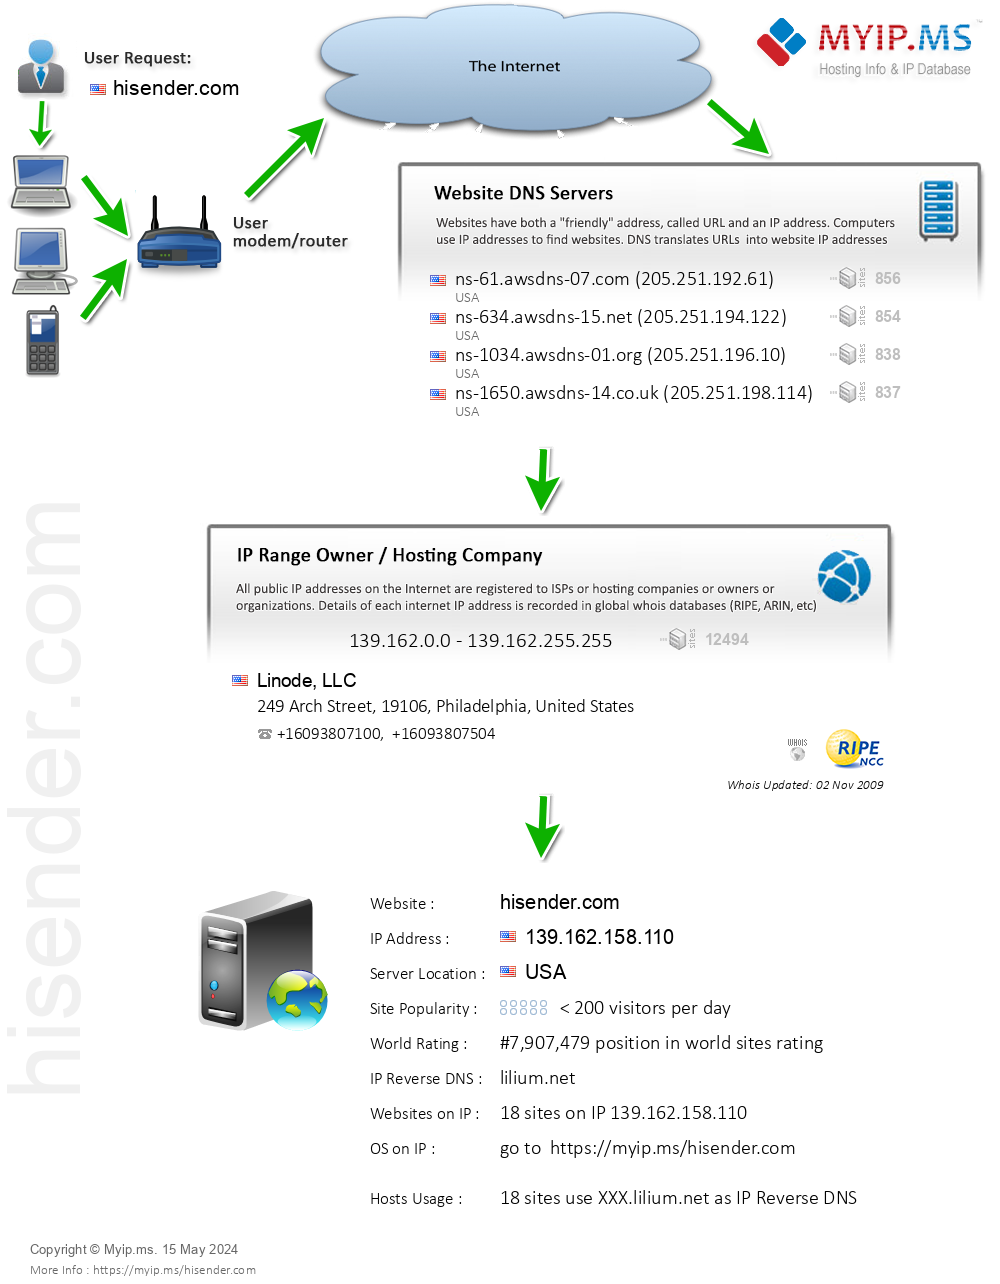 Hisender.com - Website Hosting Visual IP Diagram